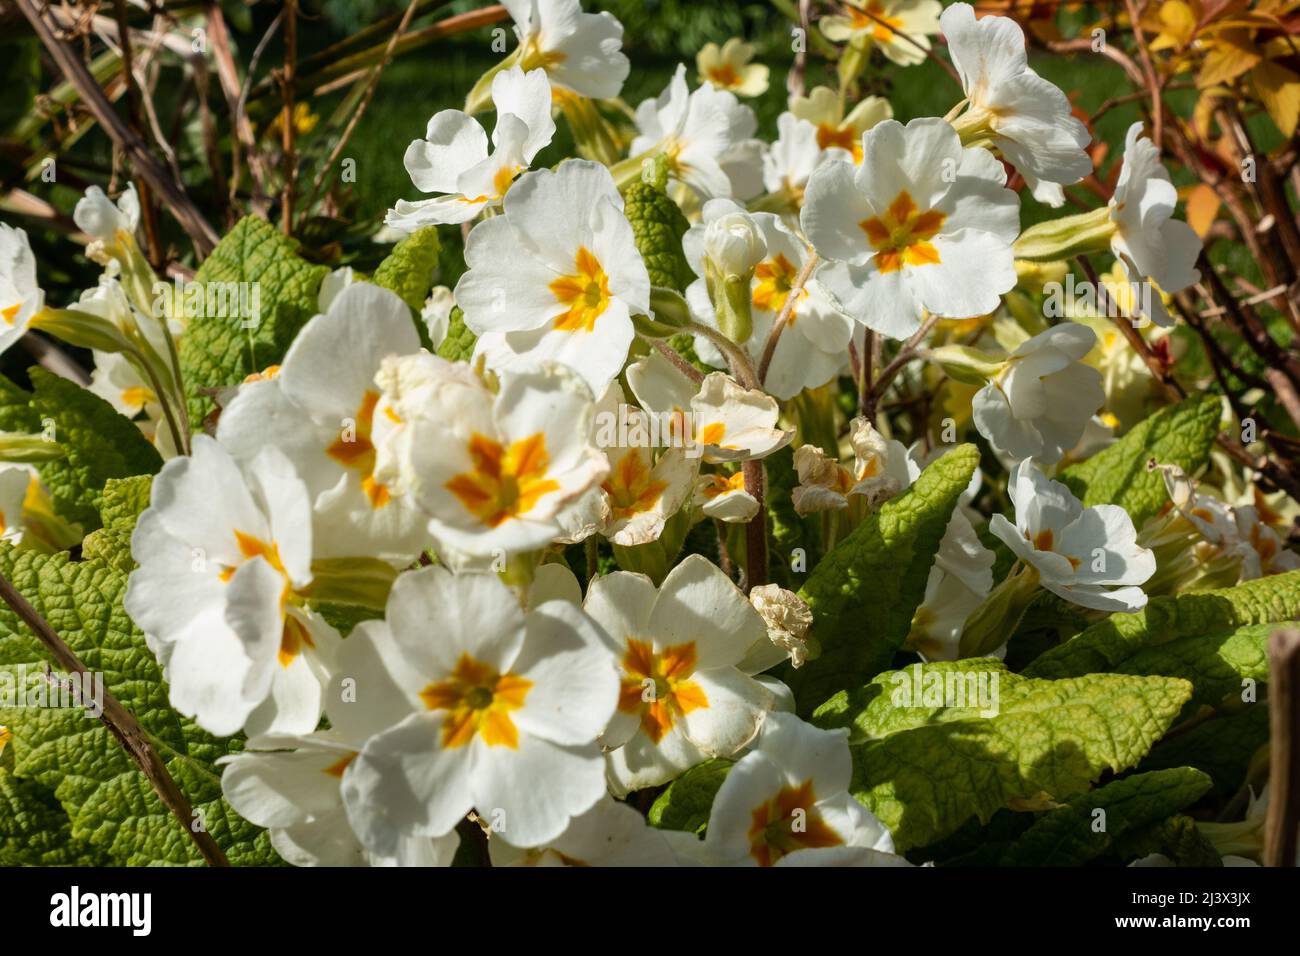 Close up view of white primrose flowers. Stock Photo